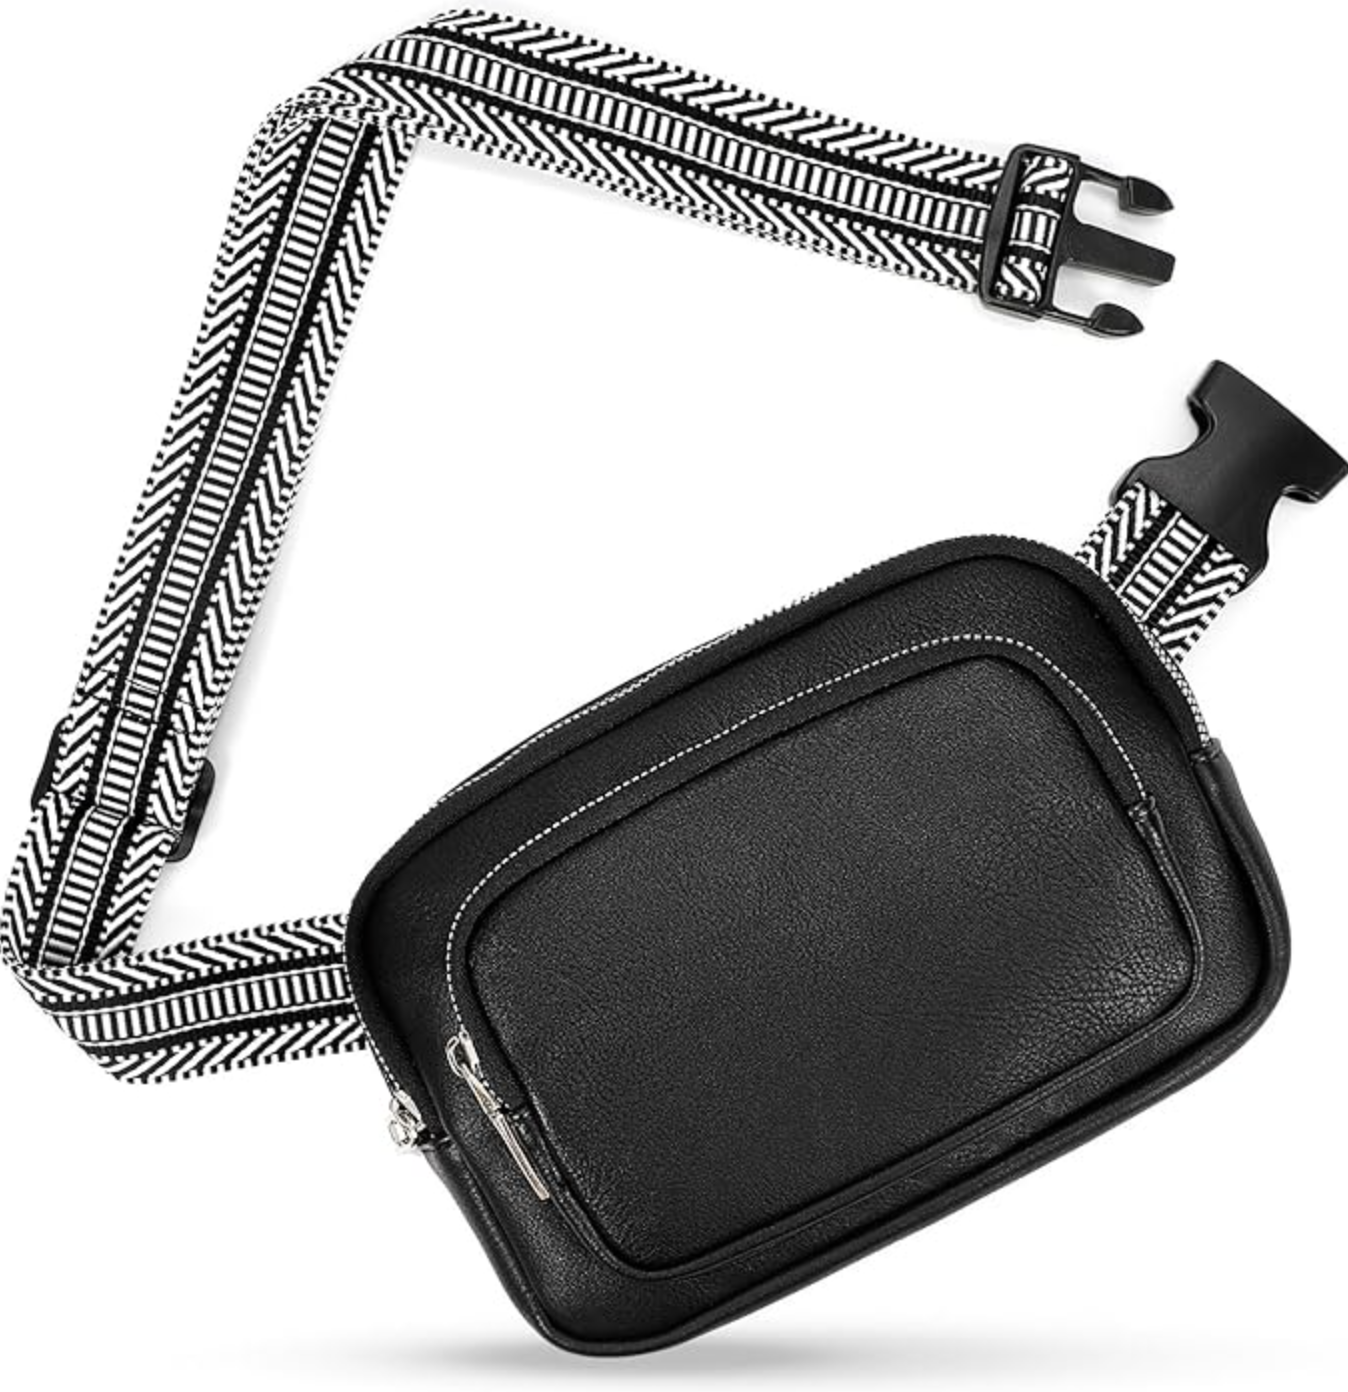 Suosdey Vegan Leather-based Belt Bag solely $10.99!